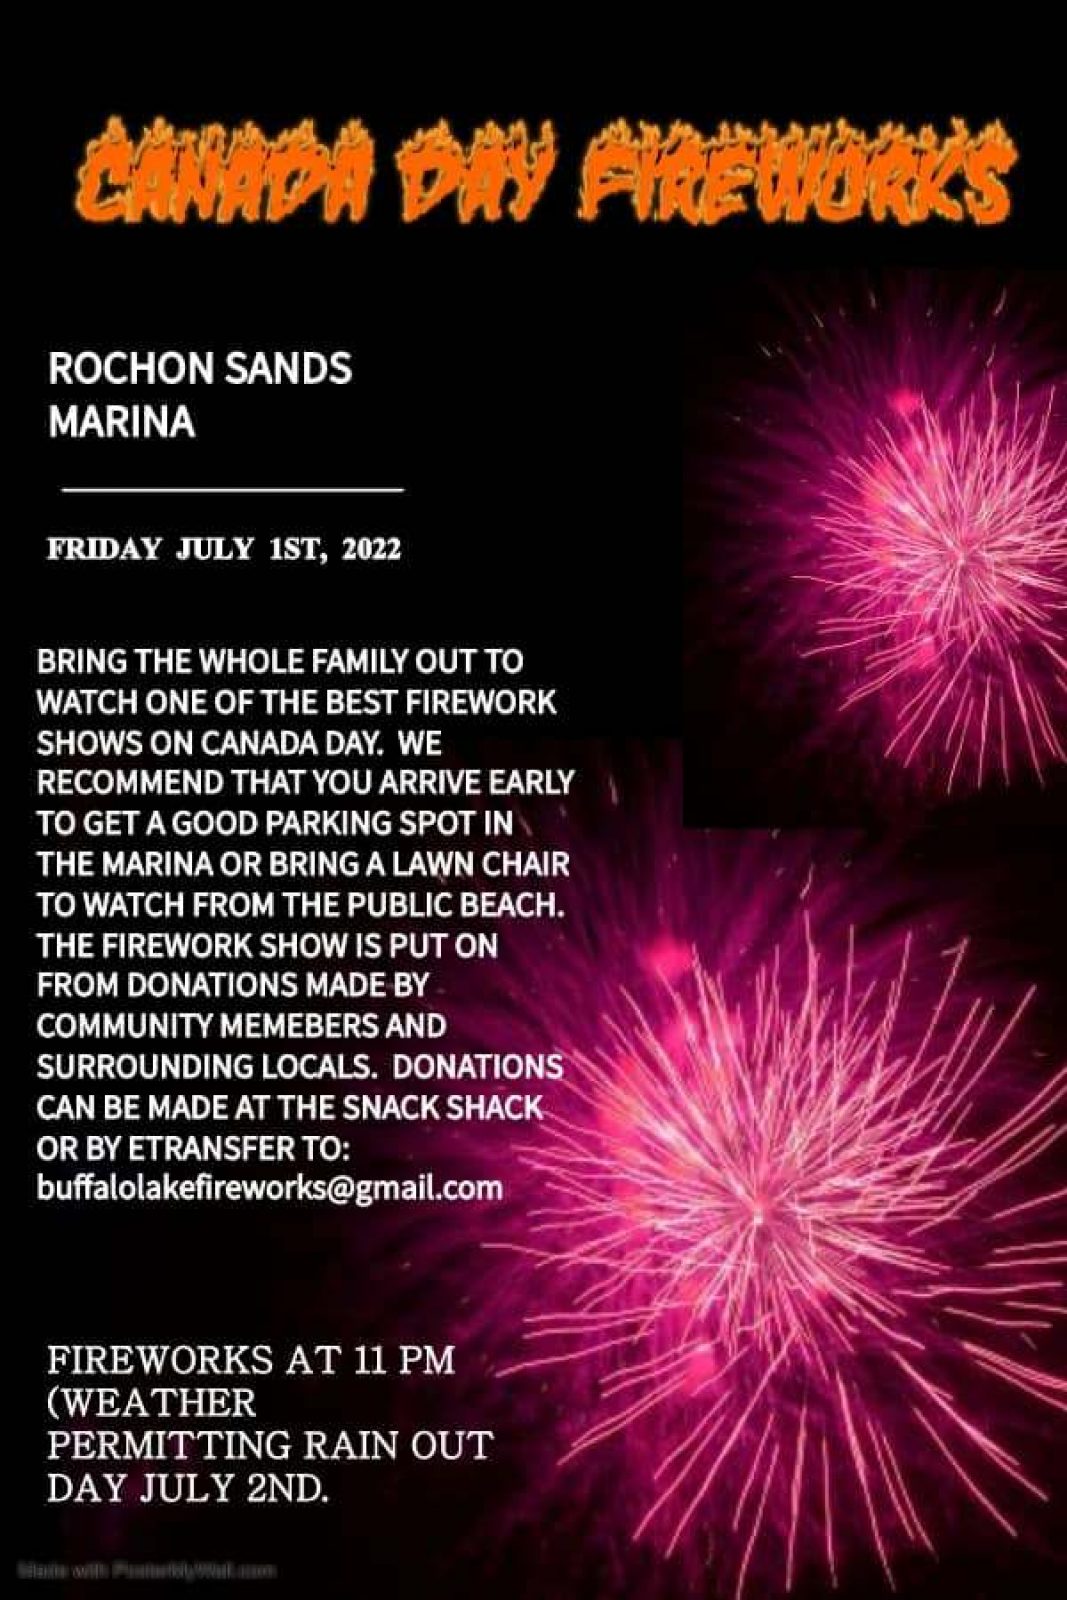 Rochon sands fireworks